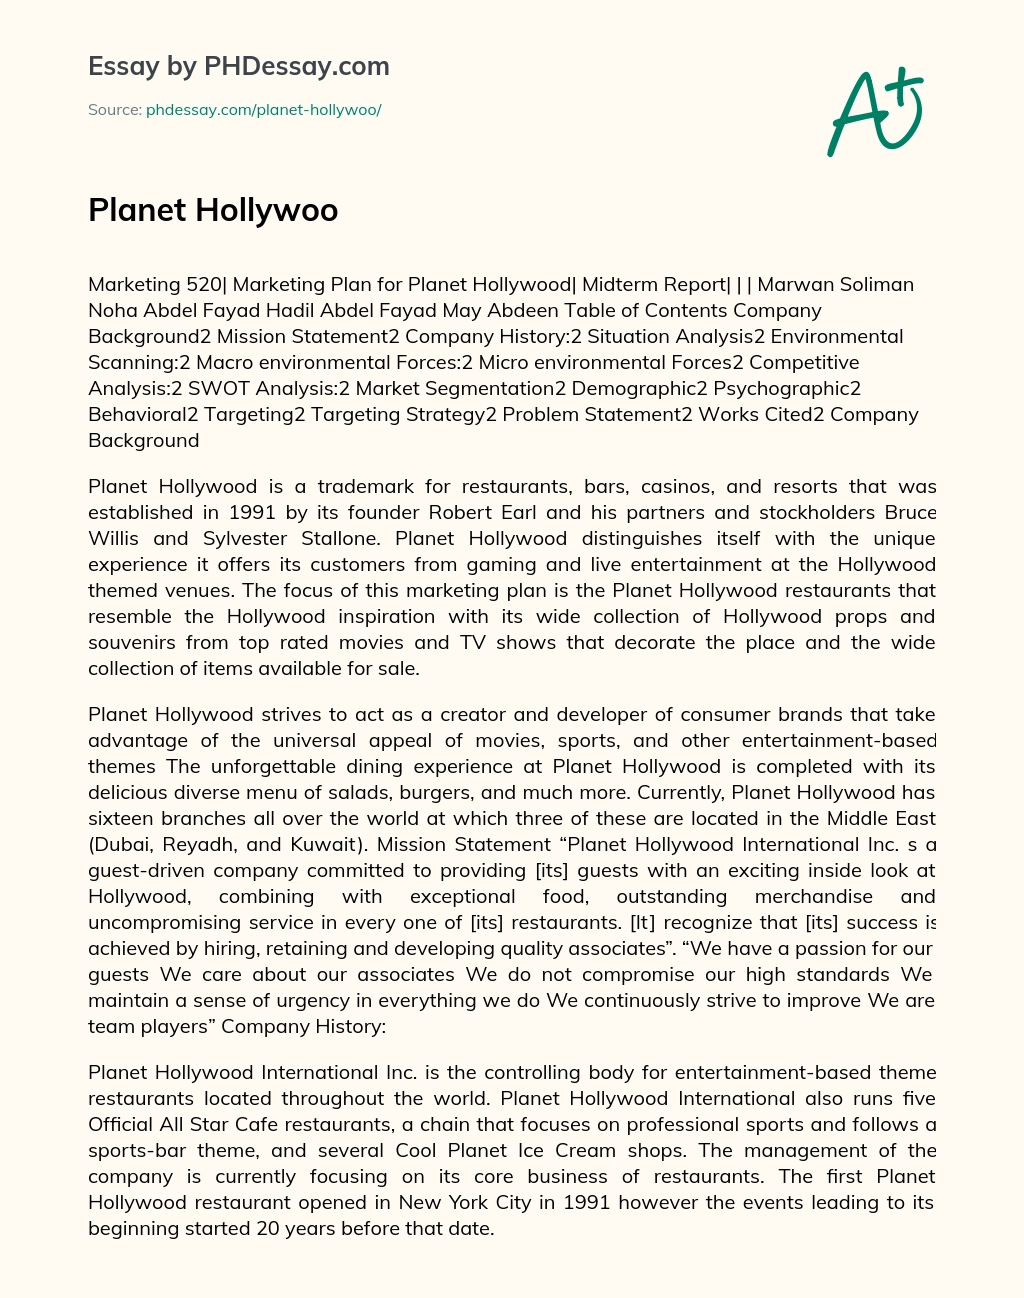 Planet Hollywoo essay